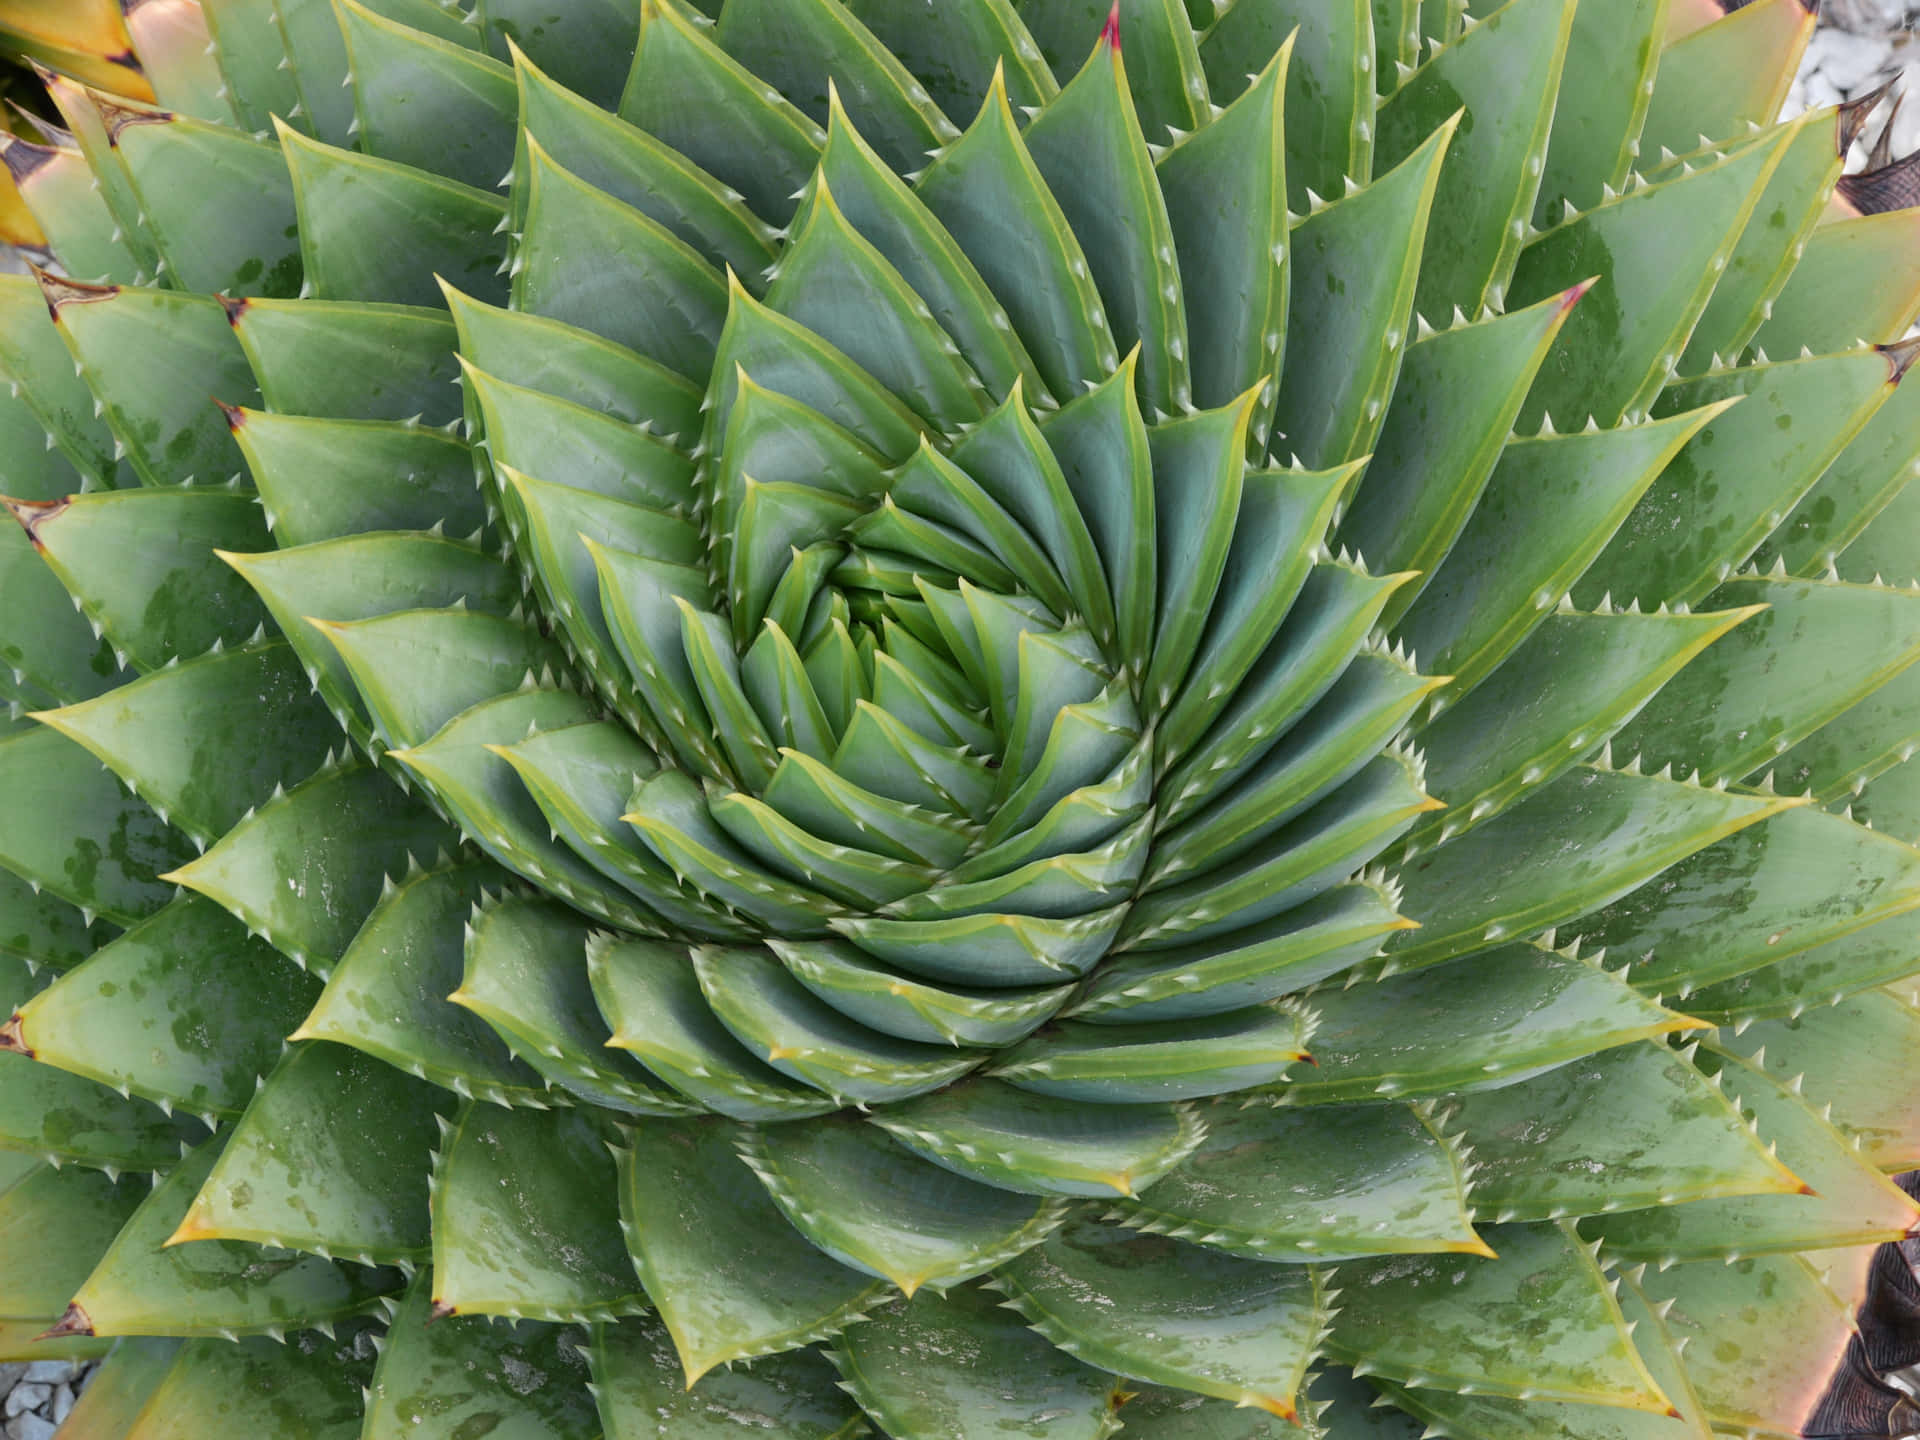 Aloe Vera plants in close-up view